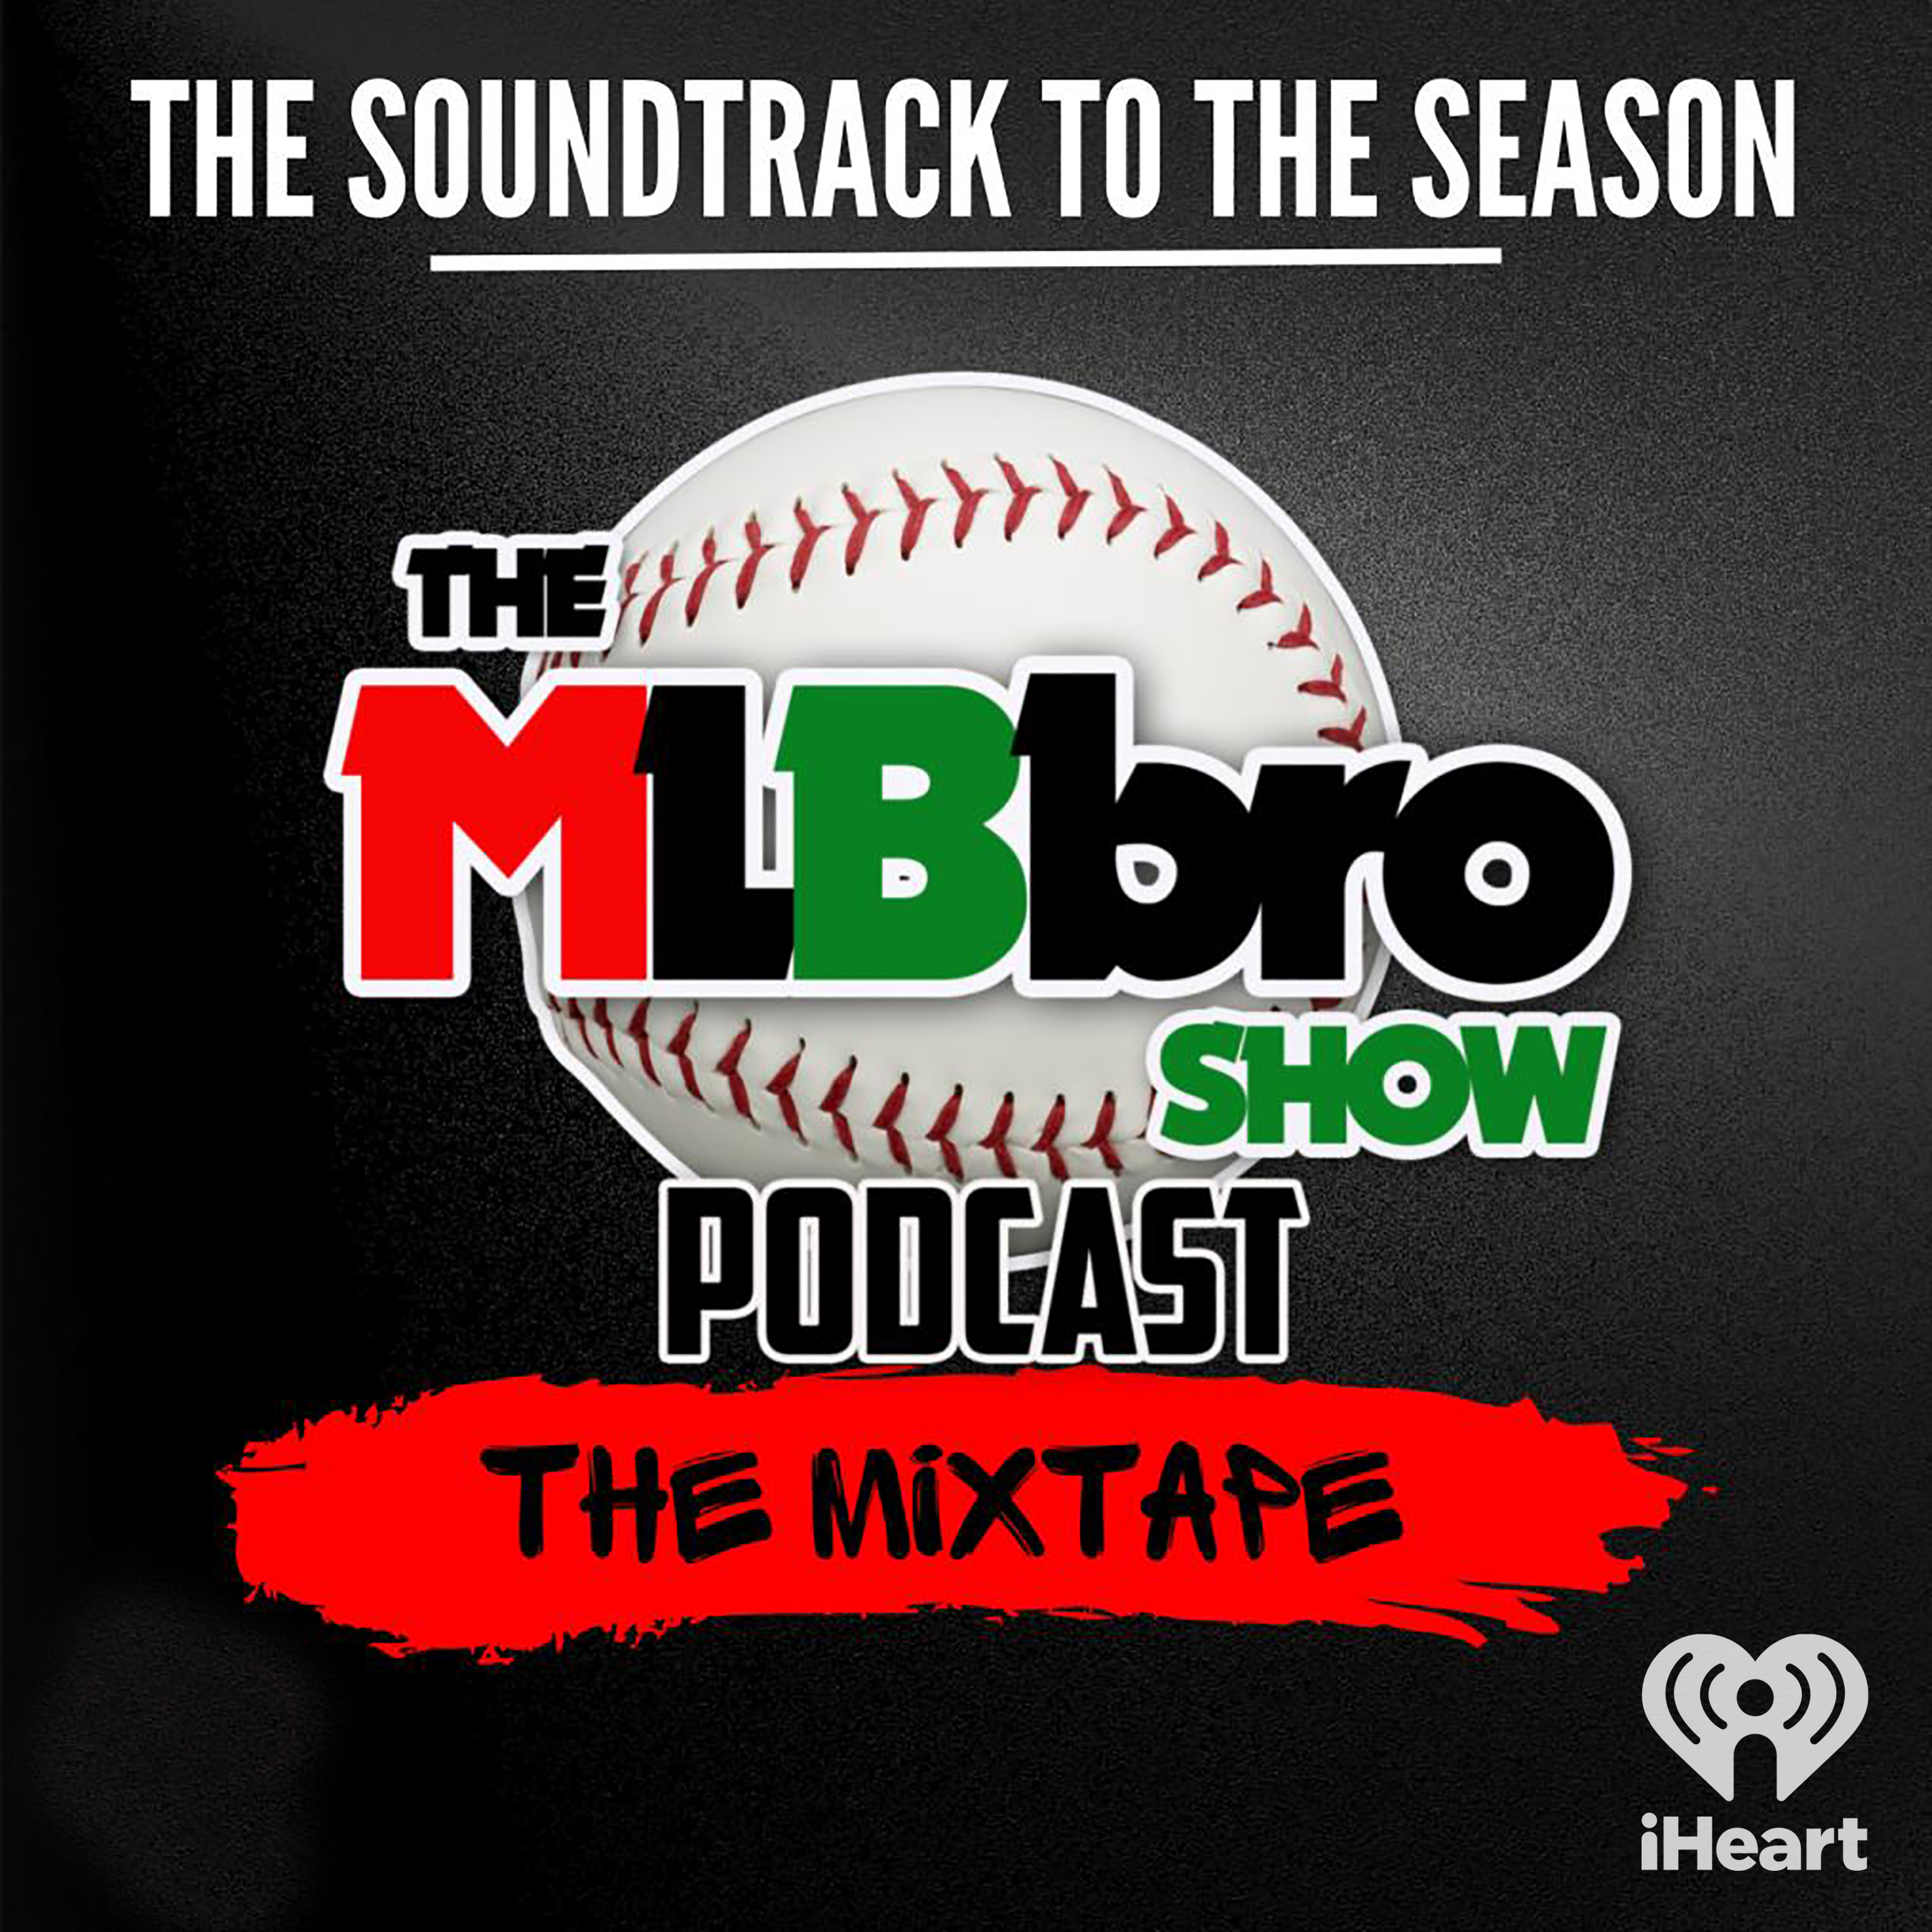 MLBbro Show Podcast The Mixtape Vol 3 Episode 9